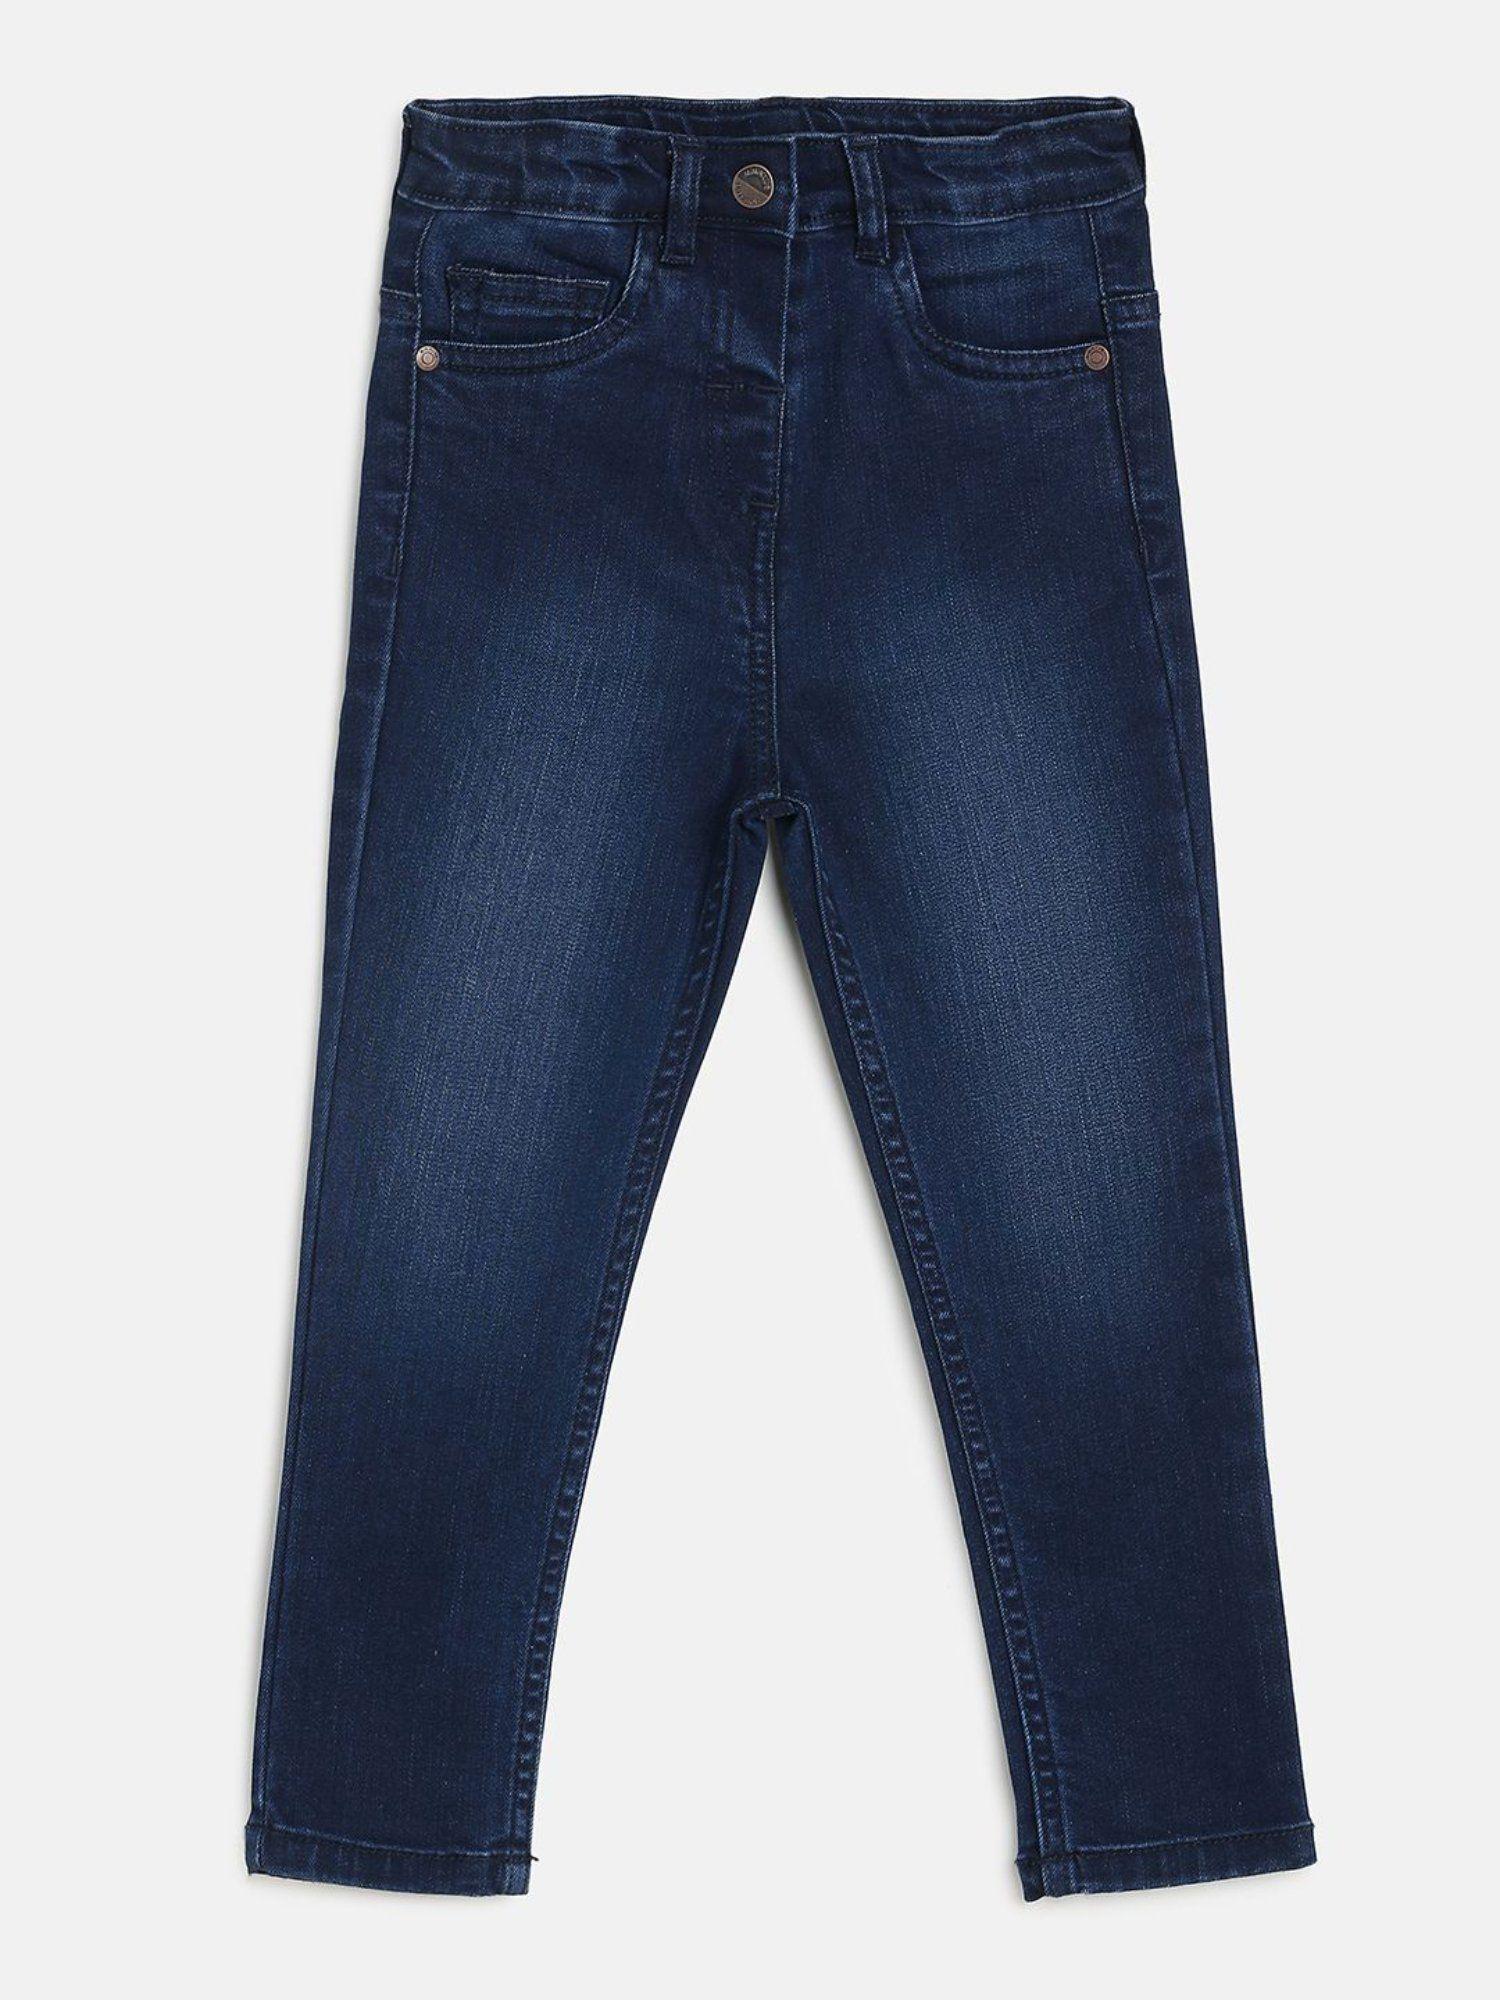 girls blue denim jeans